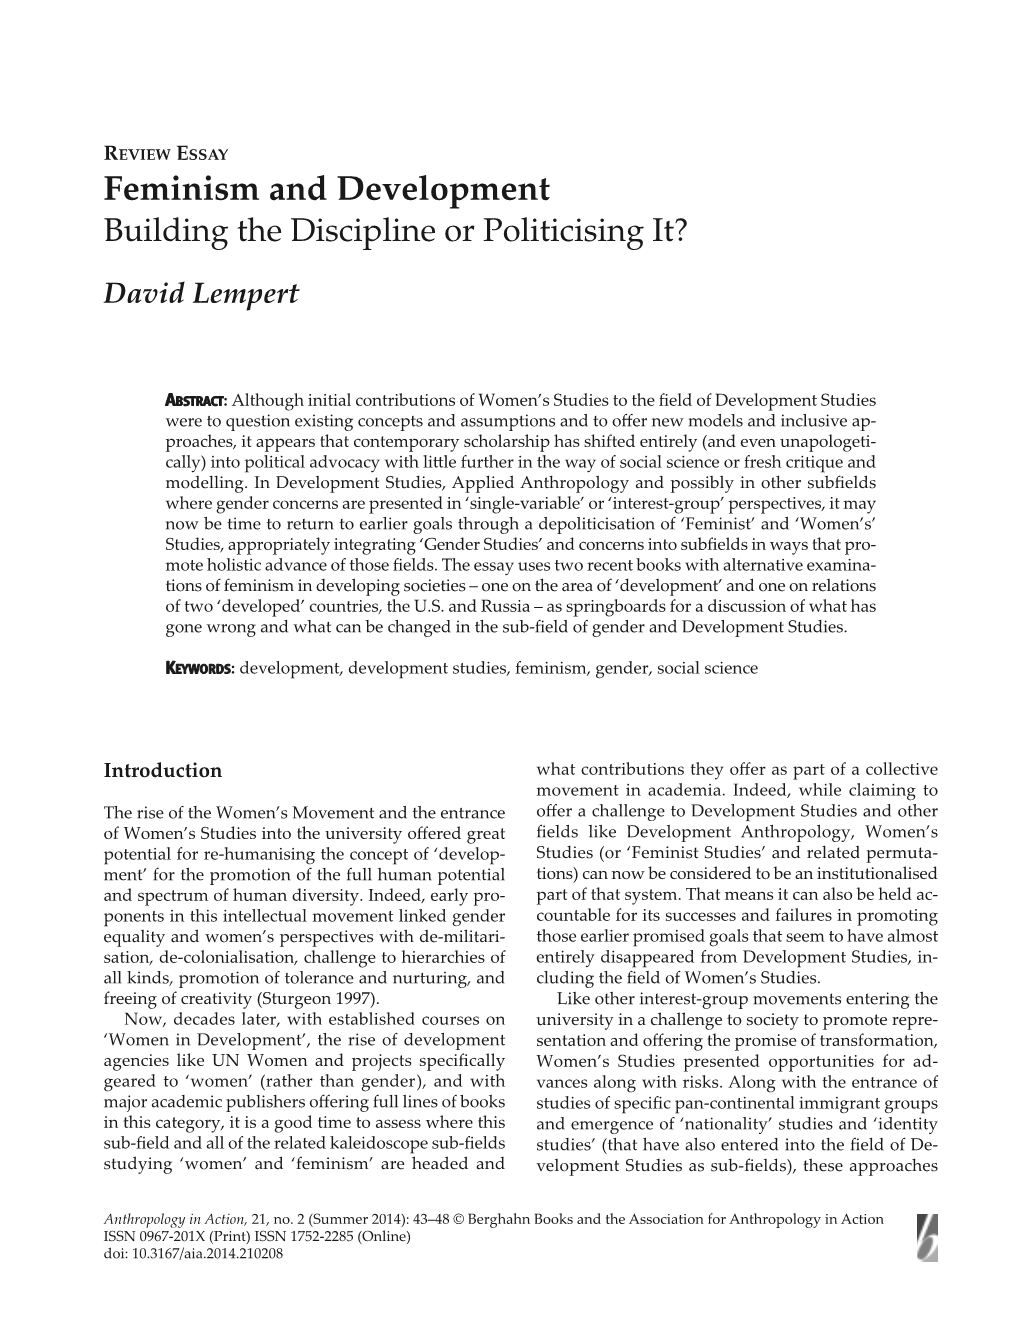 Feminism and Development Building the Discipline Or Politicising It? David Lempert